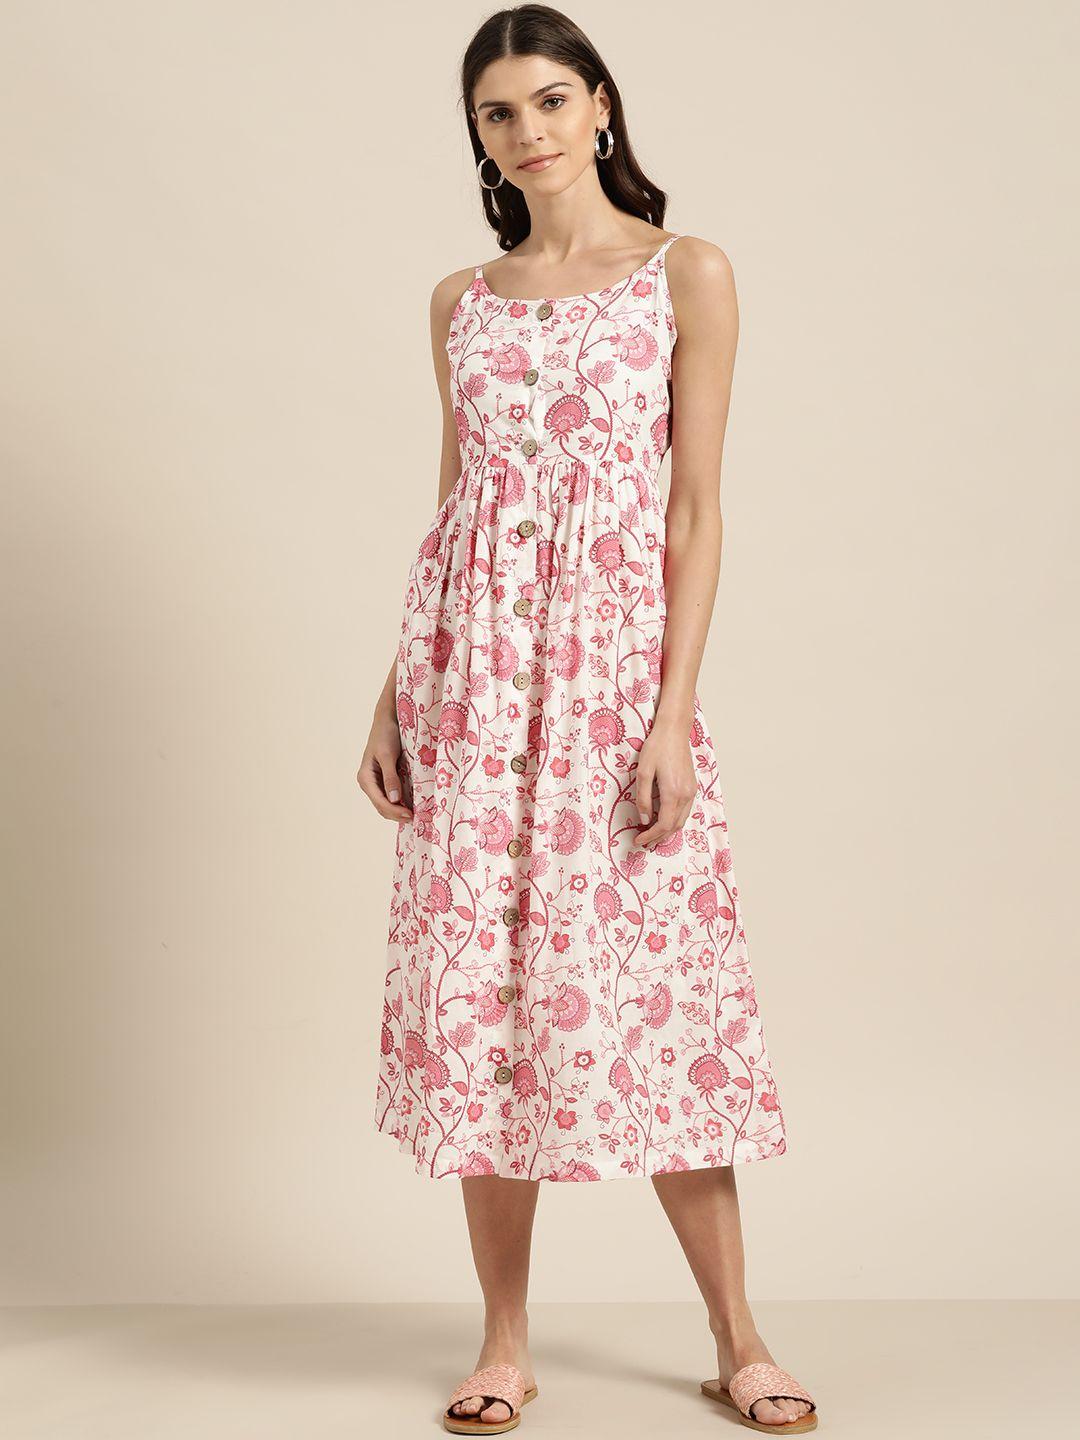 shae-by-sassafras-women-white-&-pink-printed-a-line-dress